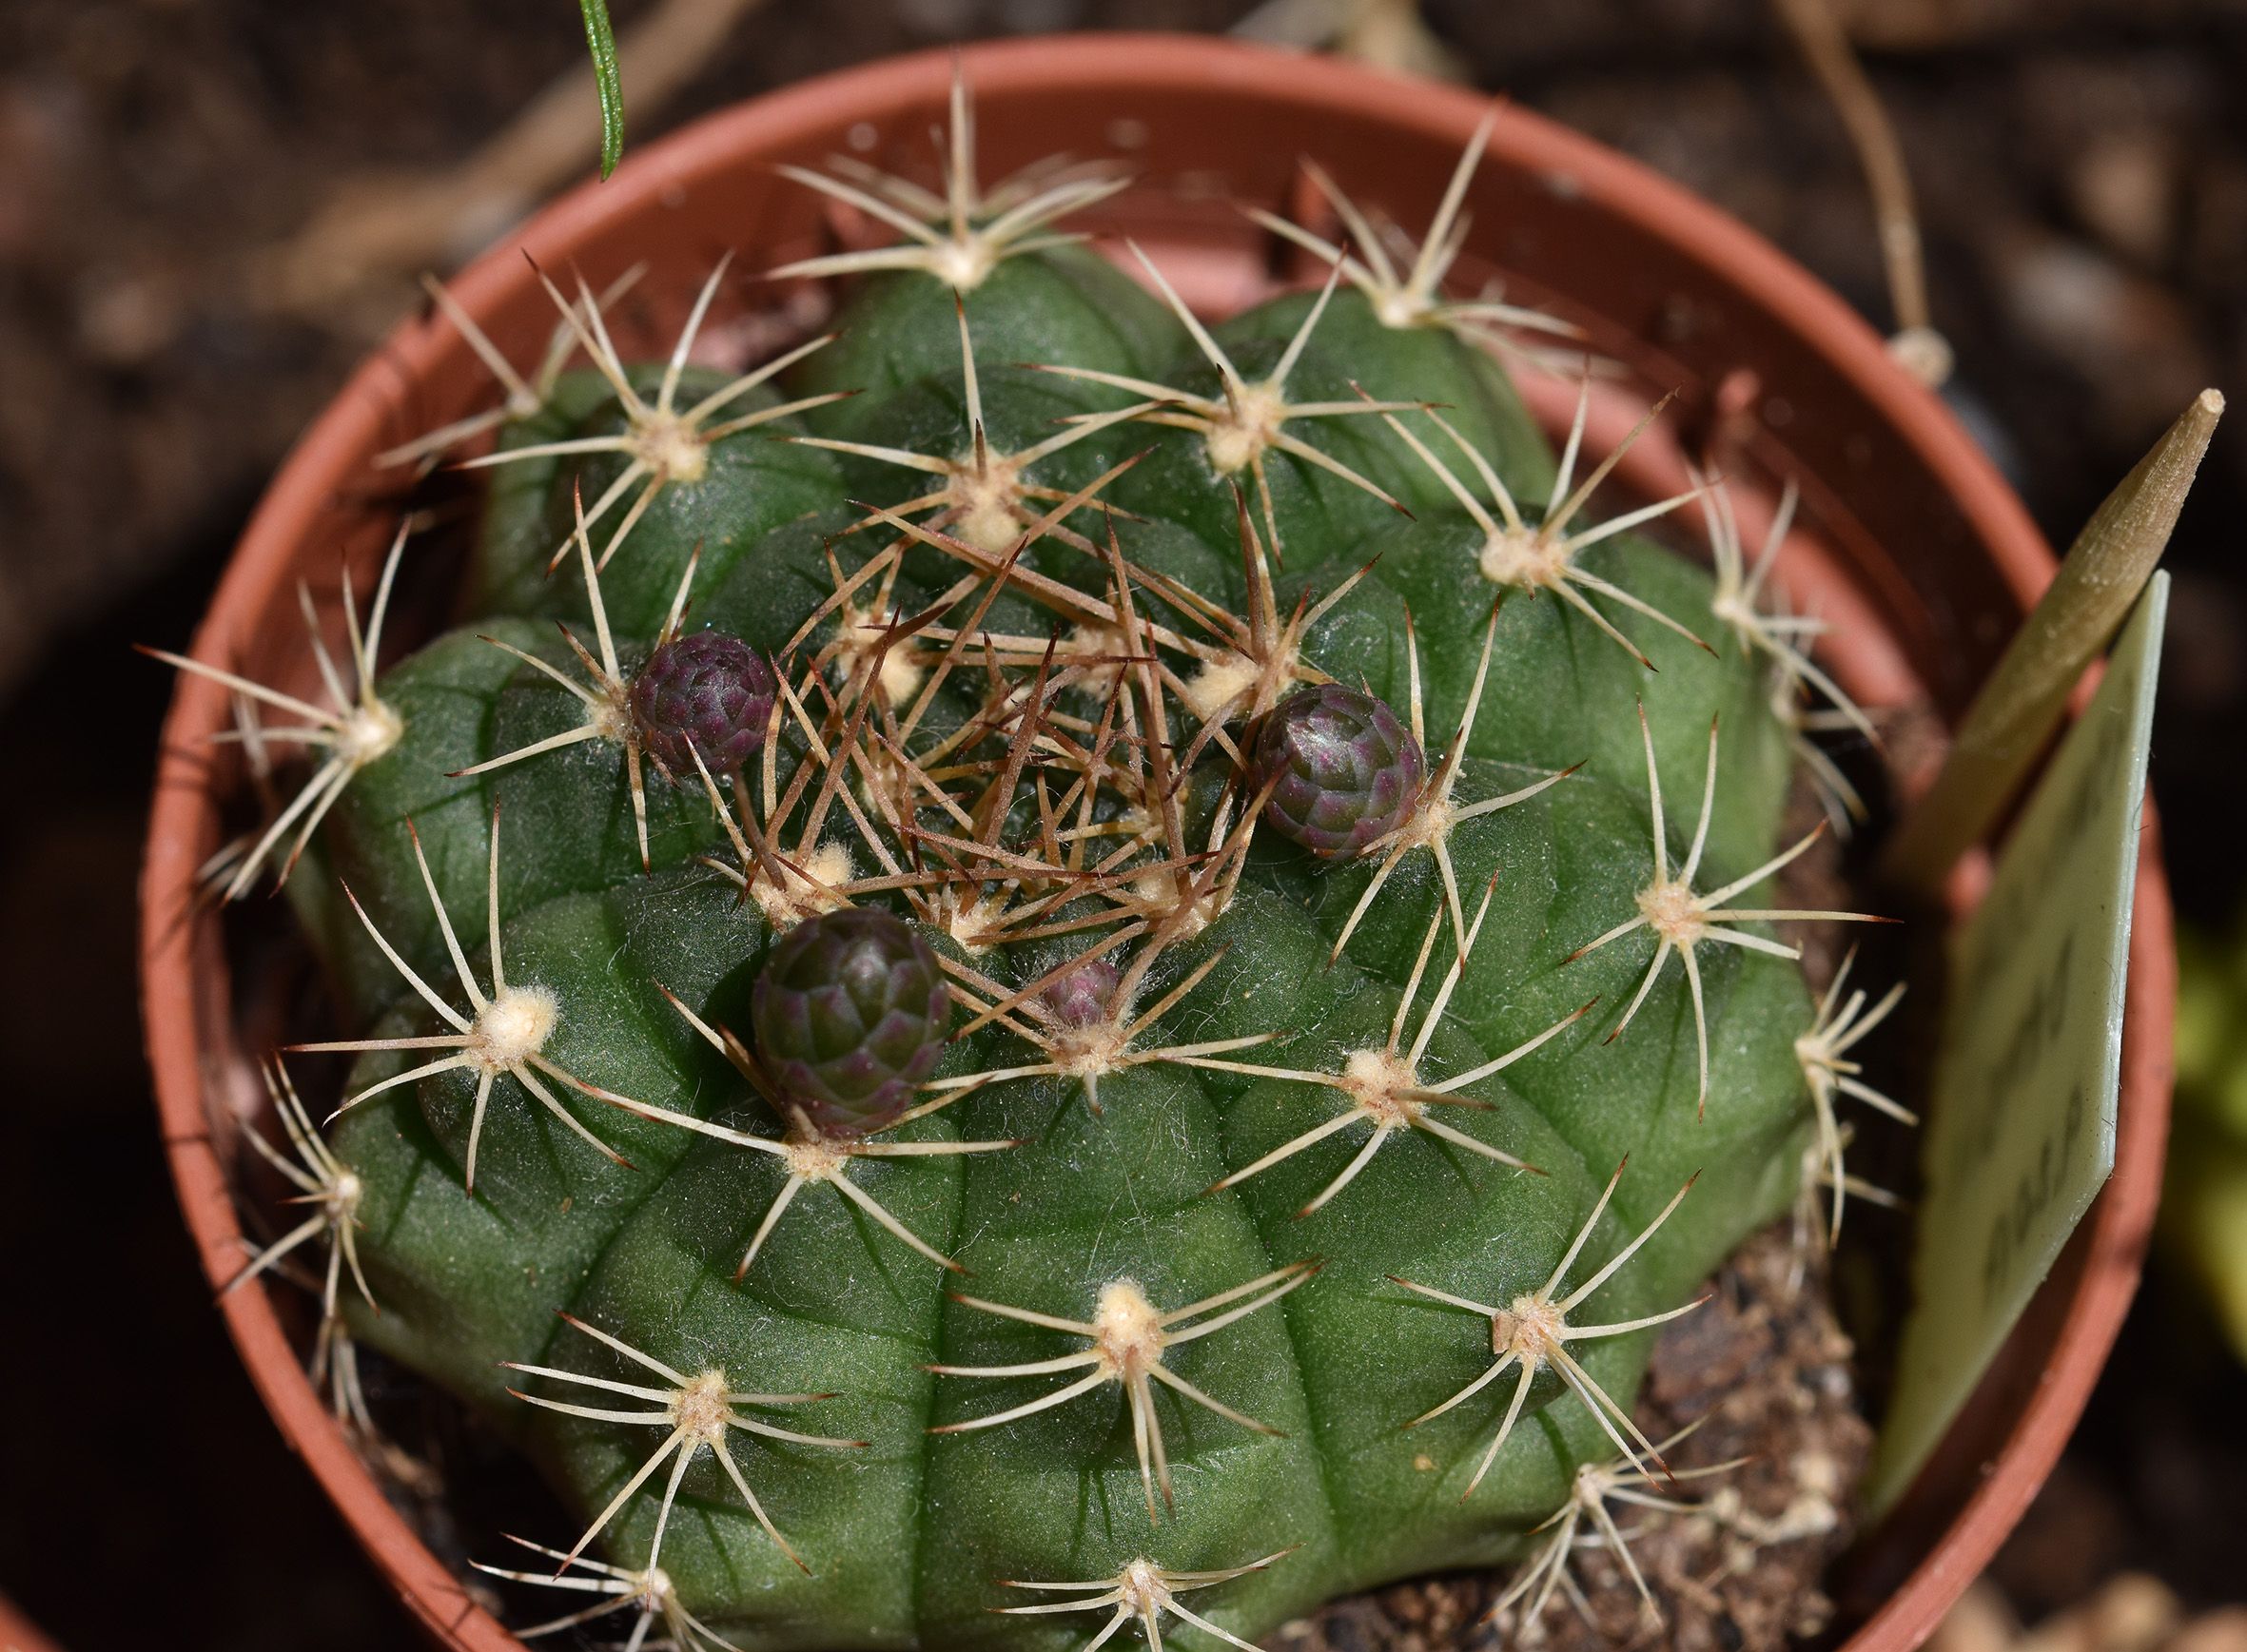 Gymnocalycium damsii cactus flower buds 3.jpg